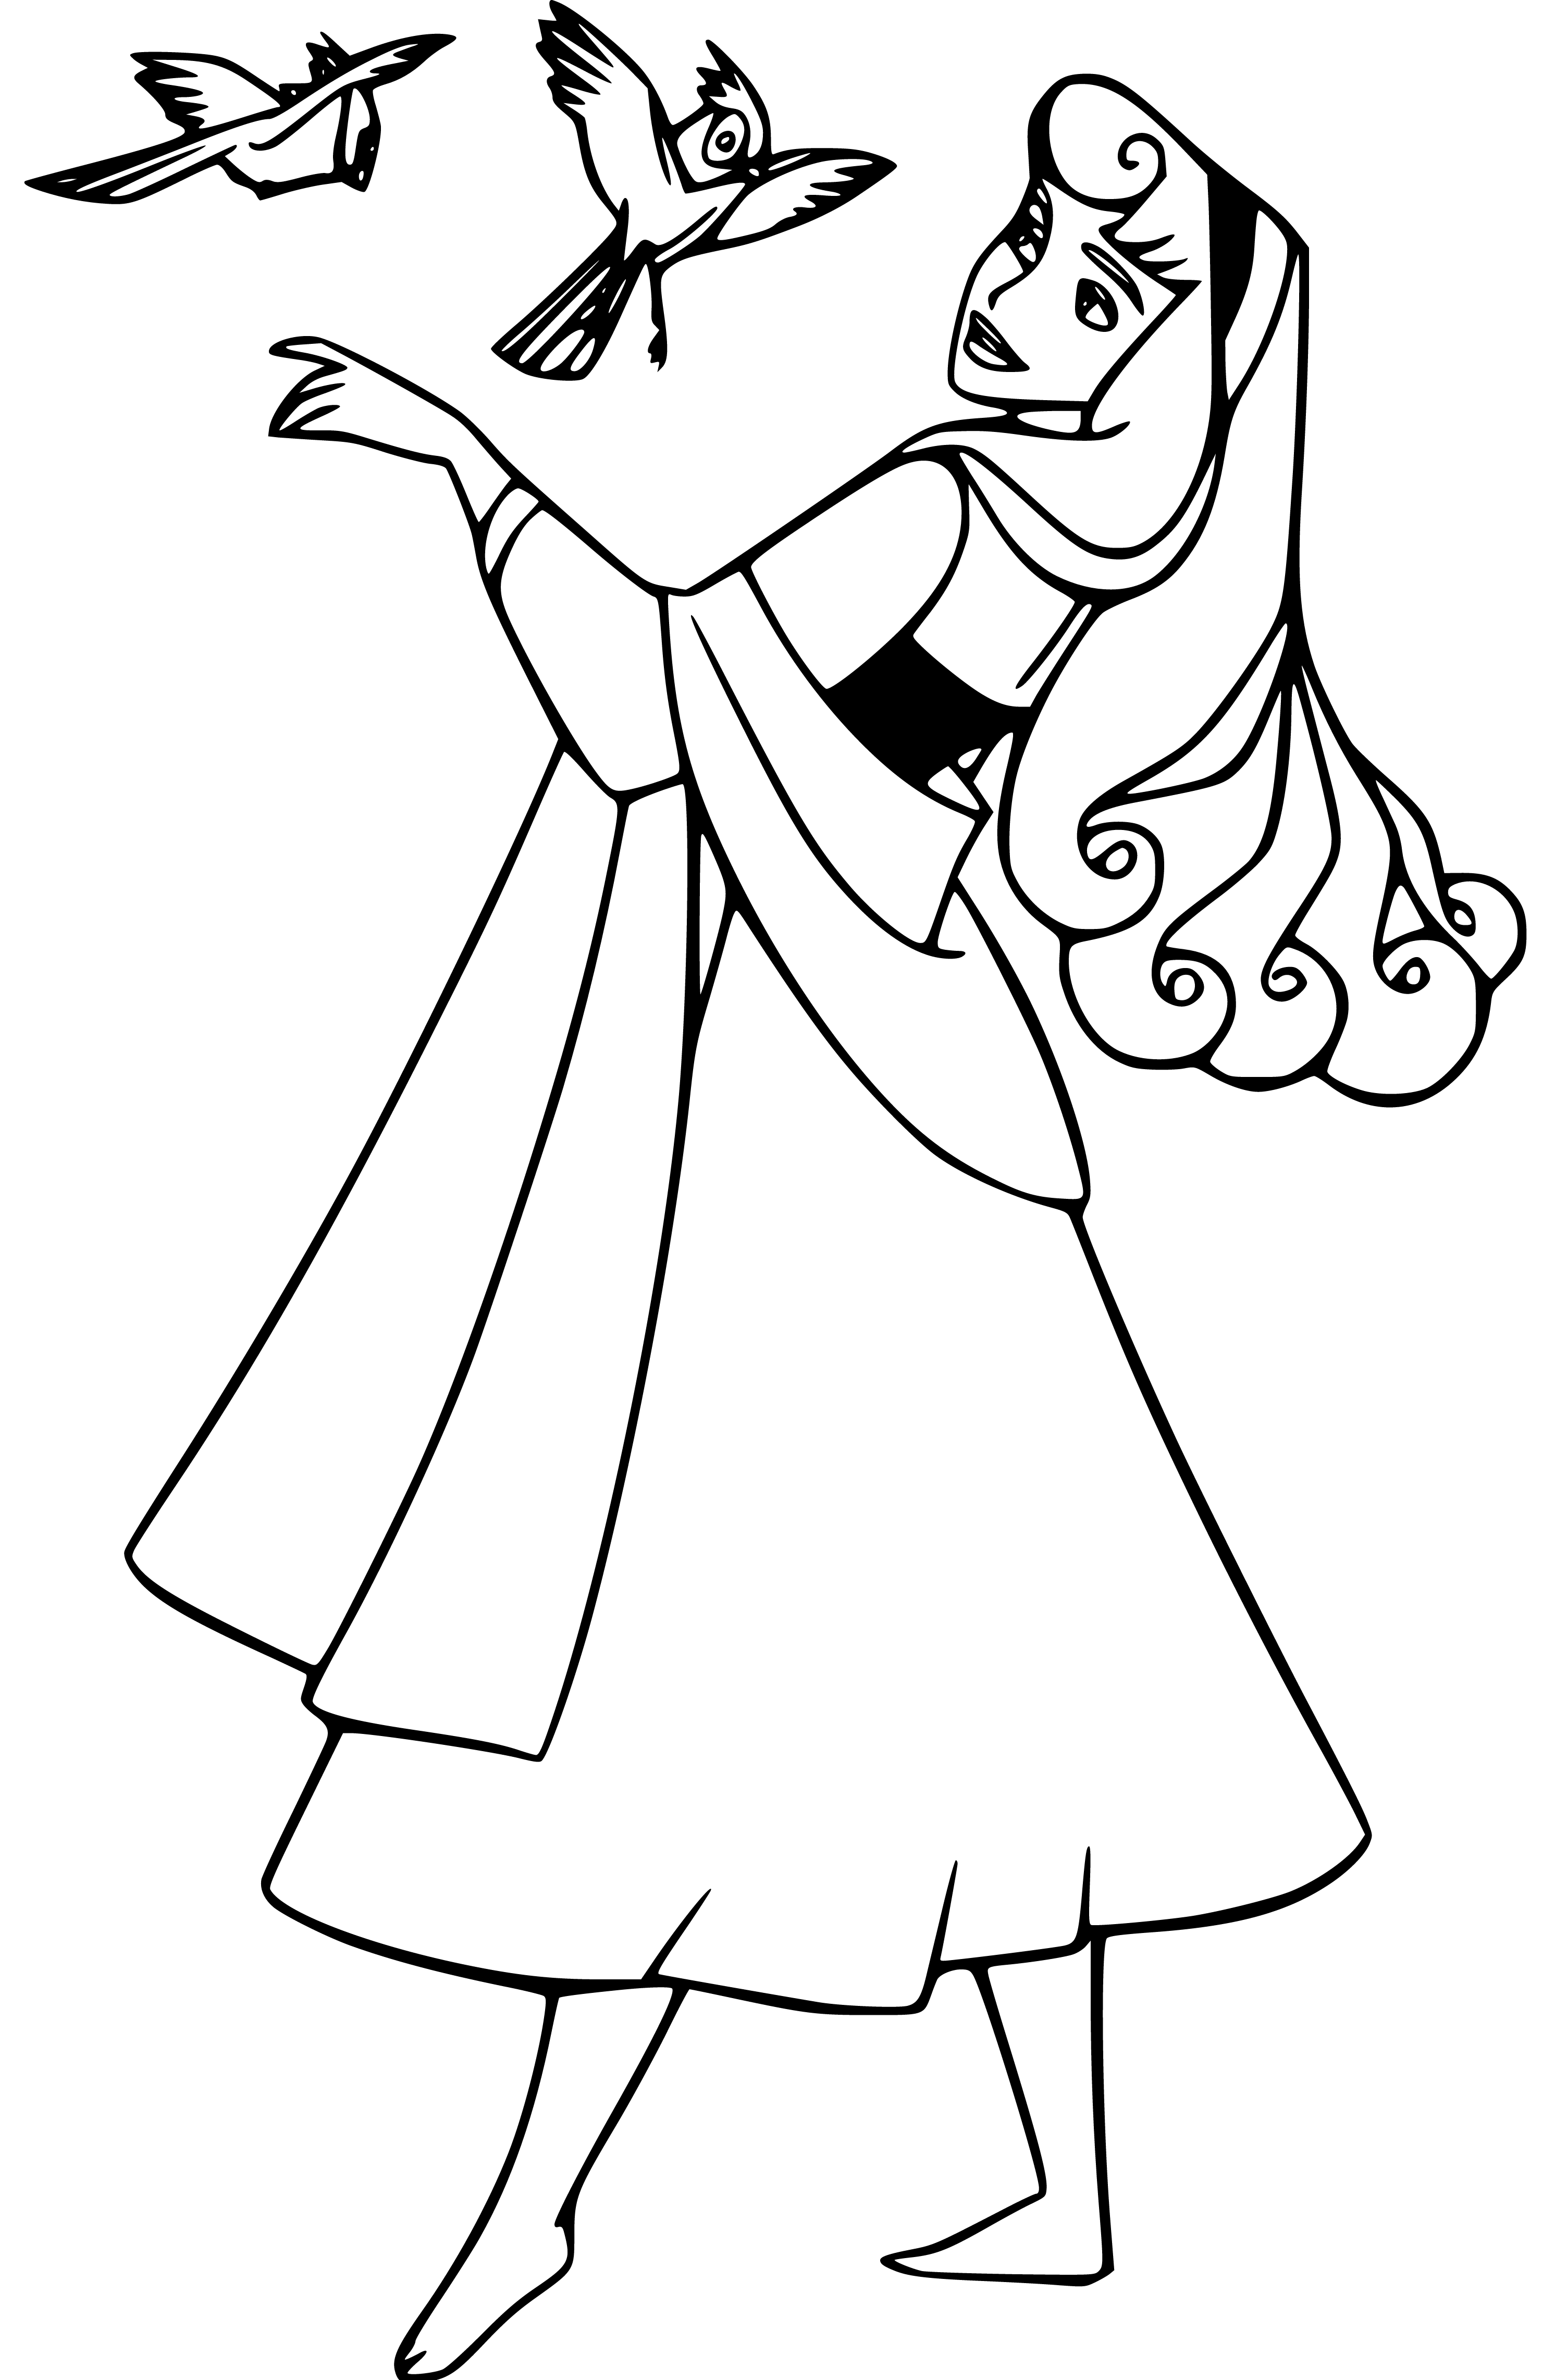 Princess Aurora Coloring Page (the Sleeping Beauty) - SheetalColor.com